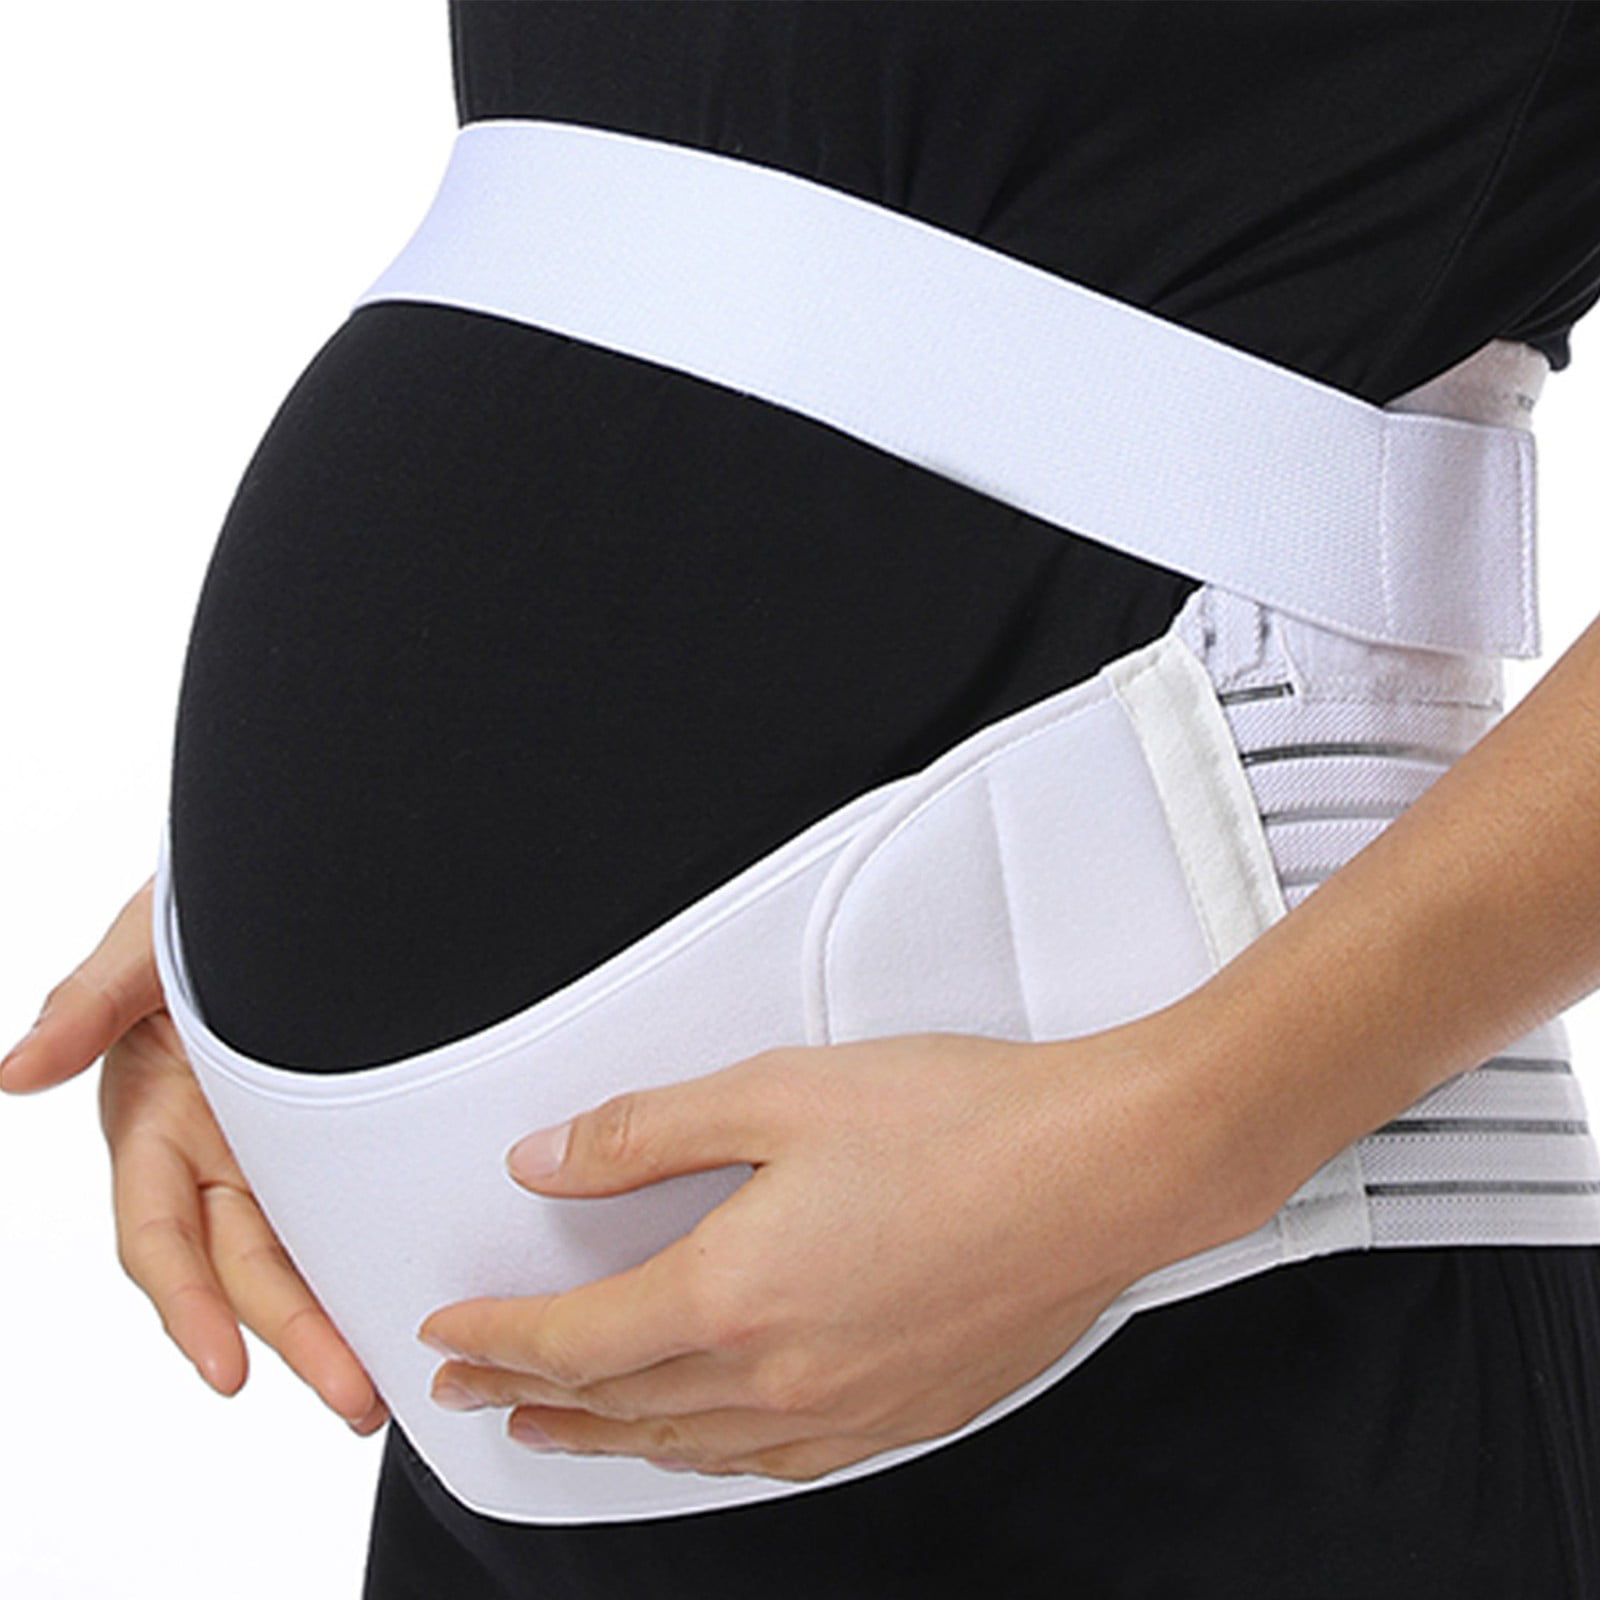 Pregnancy Maternity Belt Belly Support Band Back/Lumbar Abdominal Pelvic Girdle 